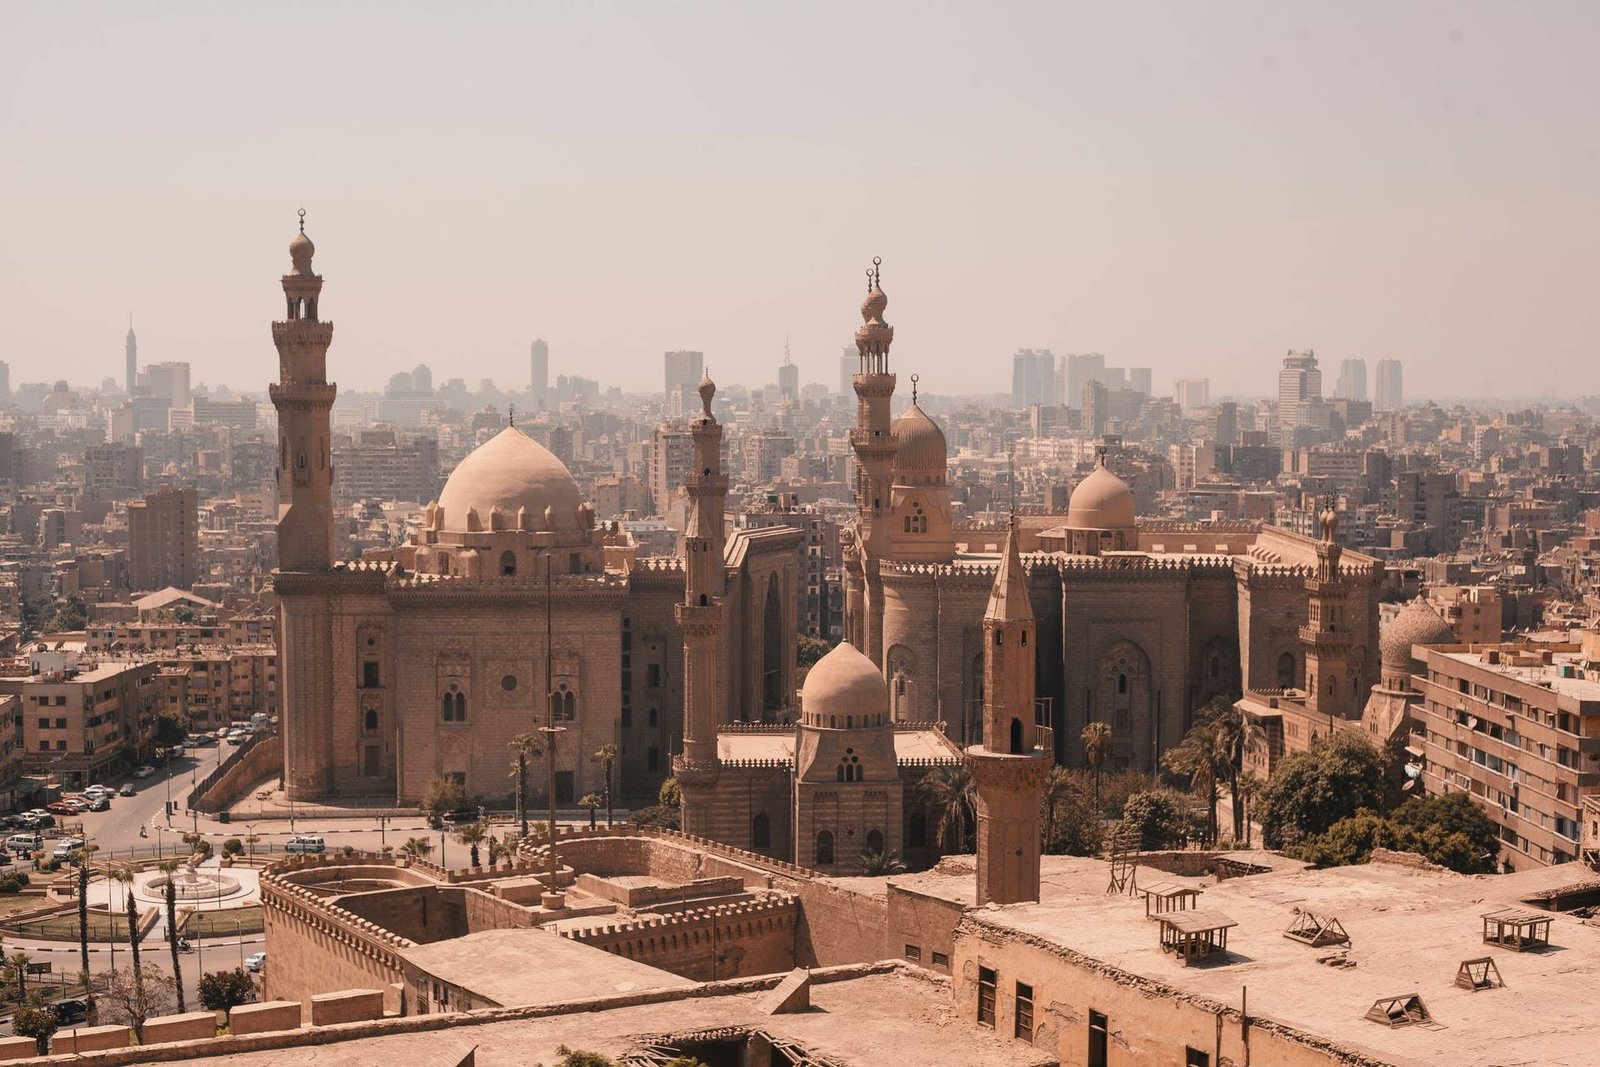 Travel to Egypt during Ramadan